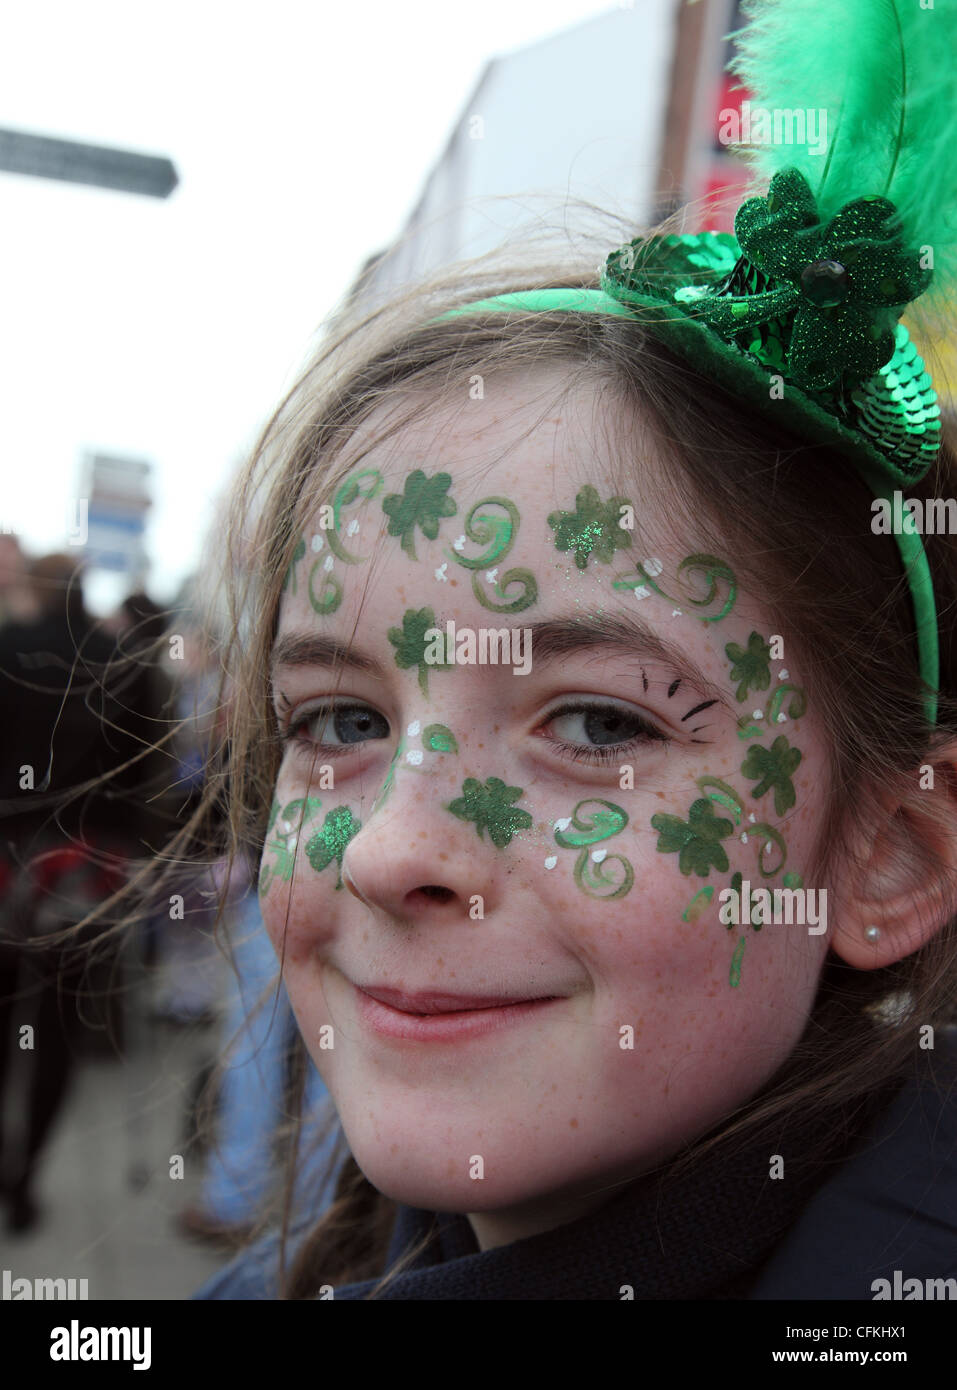 Mädchen mit Kleeblatt-bemalte Gesicht, St. Patricks Day Parade, Carrickmacross, Co. Monaghan, Irland Stockfoto